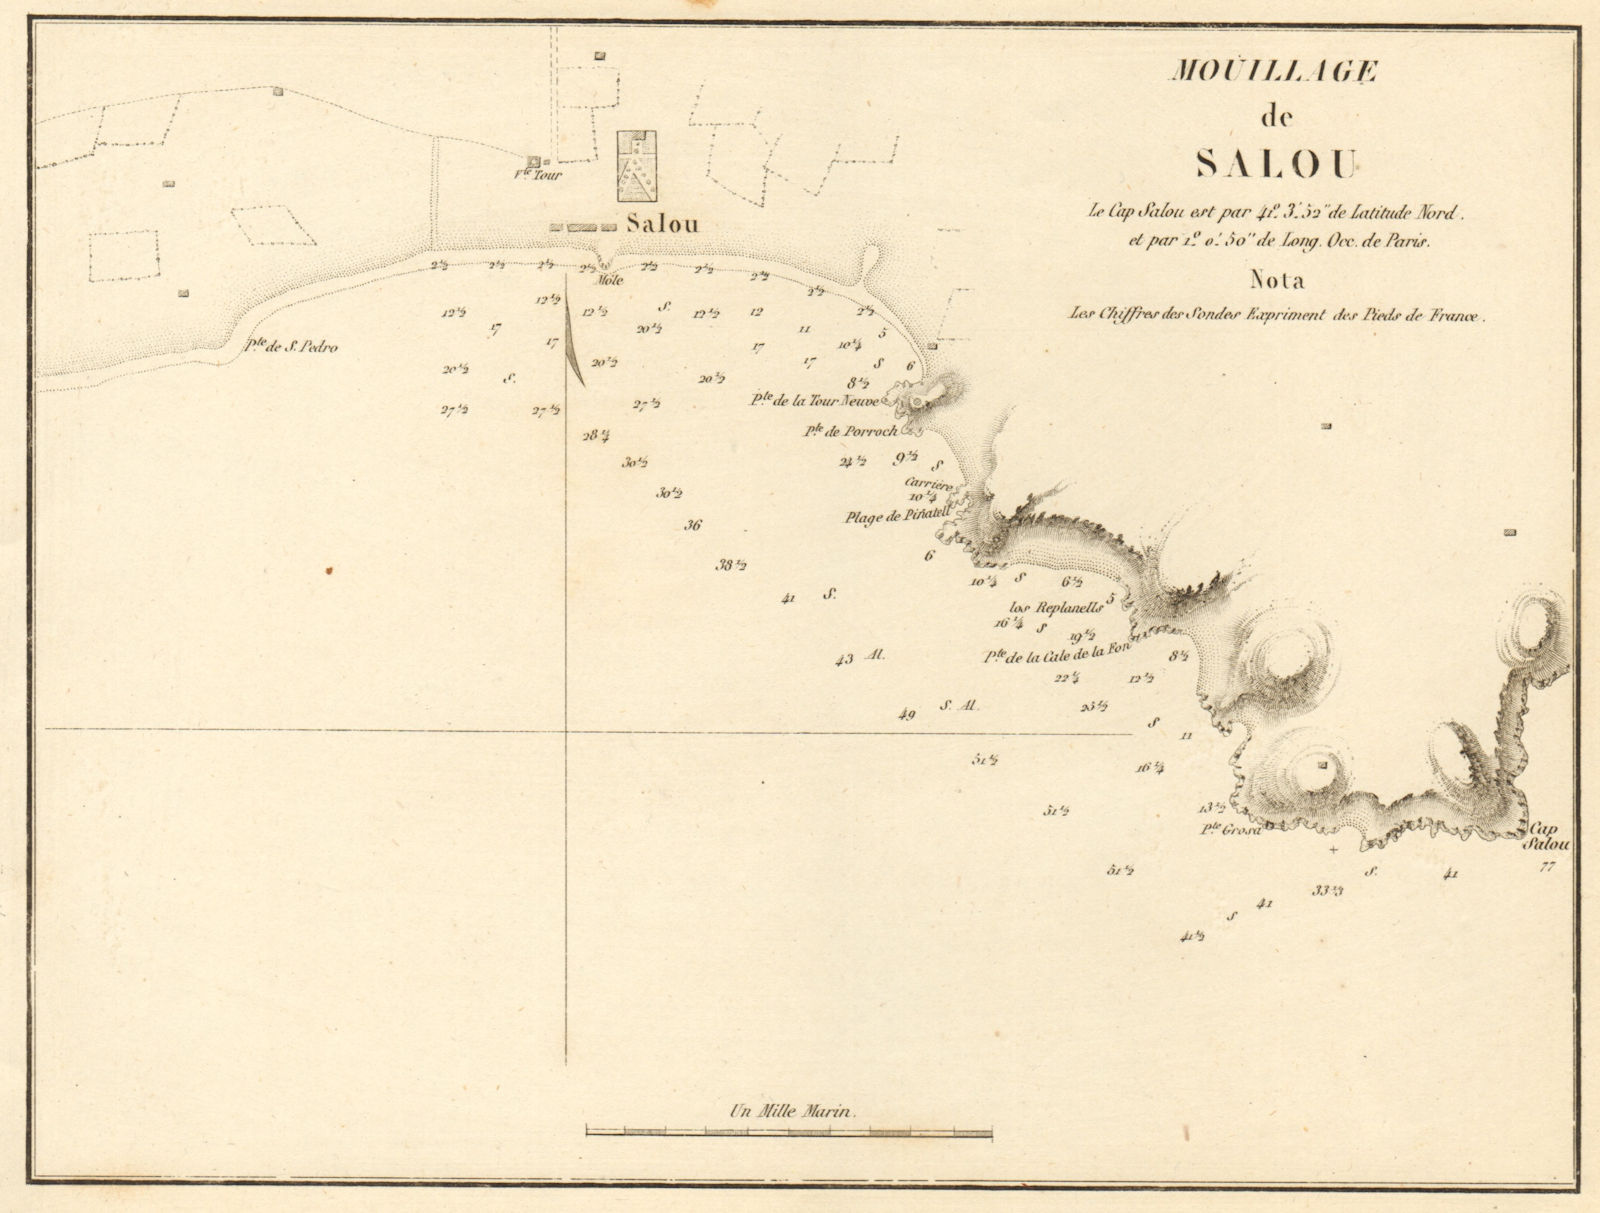 Anchorage of Salou. 'Mouillage de Salou'. Spain. Tarragona. GAUTTIER 1851 map